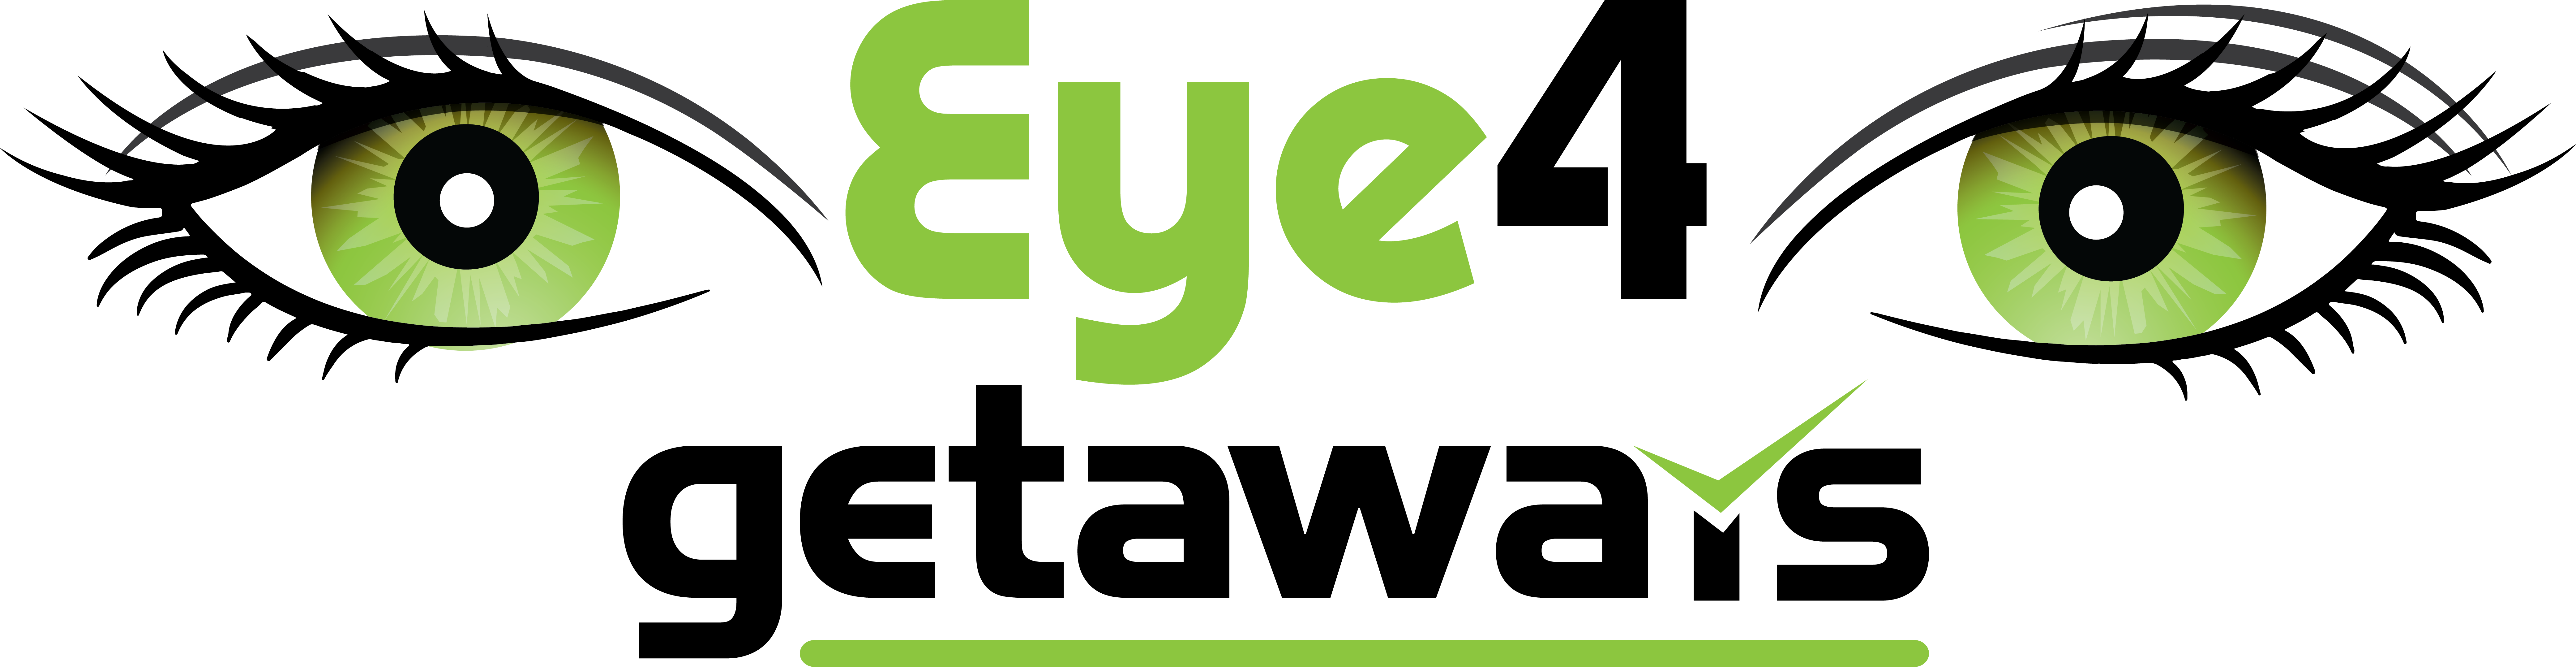 Eye4getaways